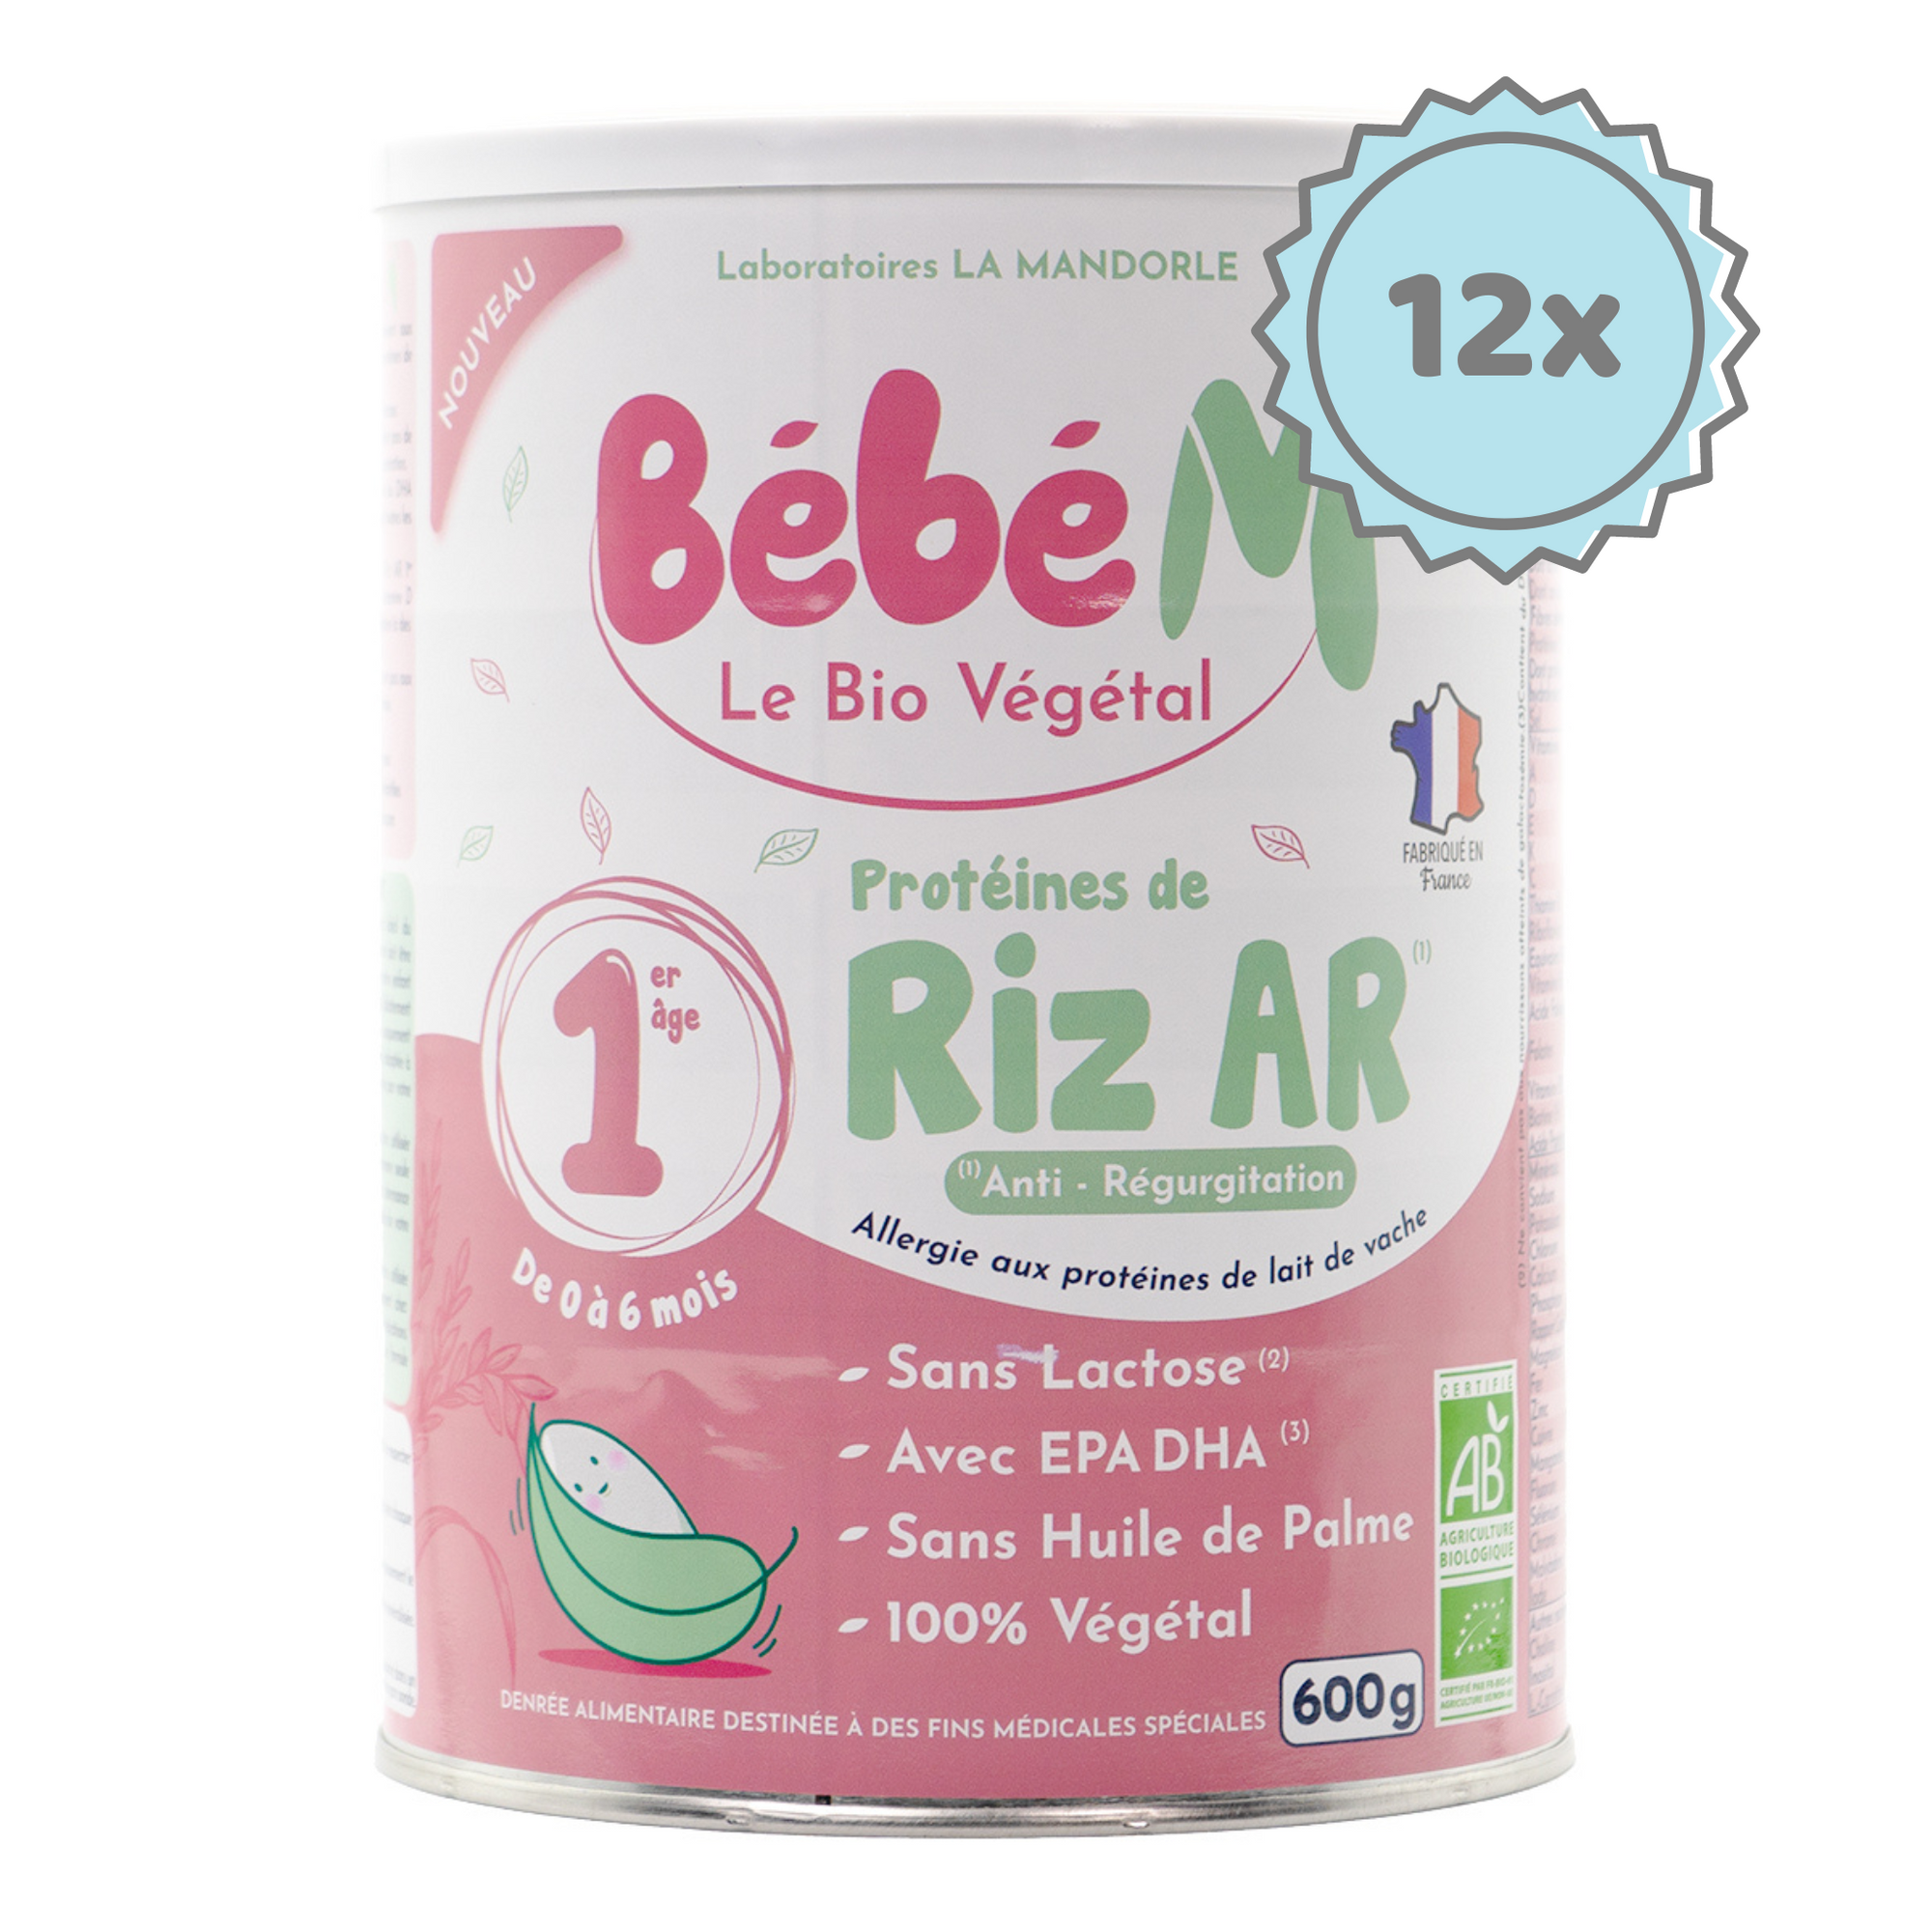 Bebe M (Bebe Mandorle) Organic Anti-Reflux Rice-Based Infant Formula - Stage 1 (0 to 6 months) | Organic Baby Formula | 12 cans